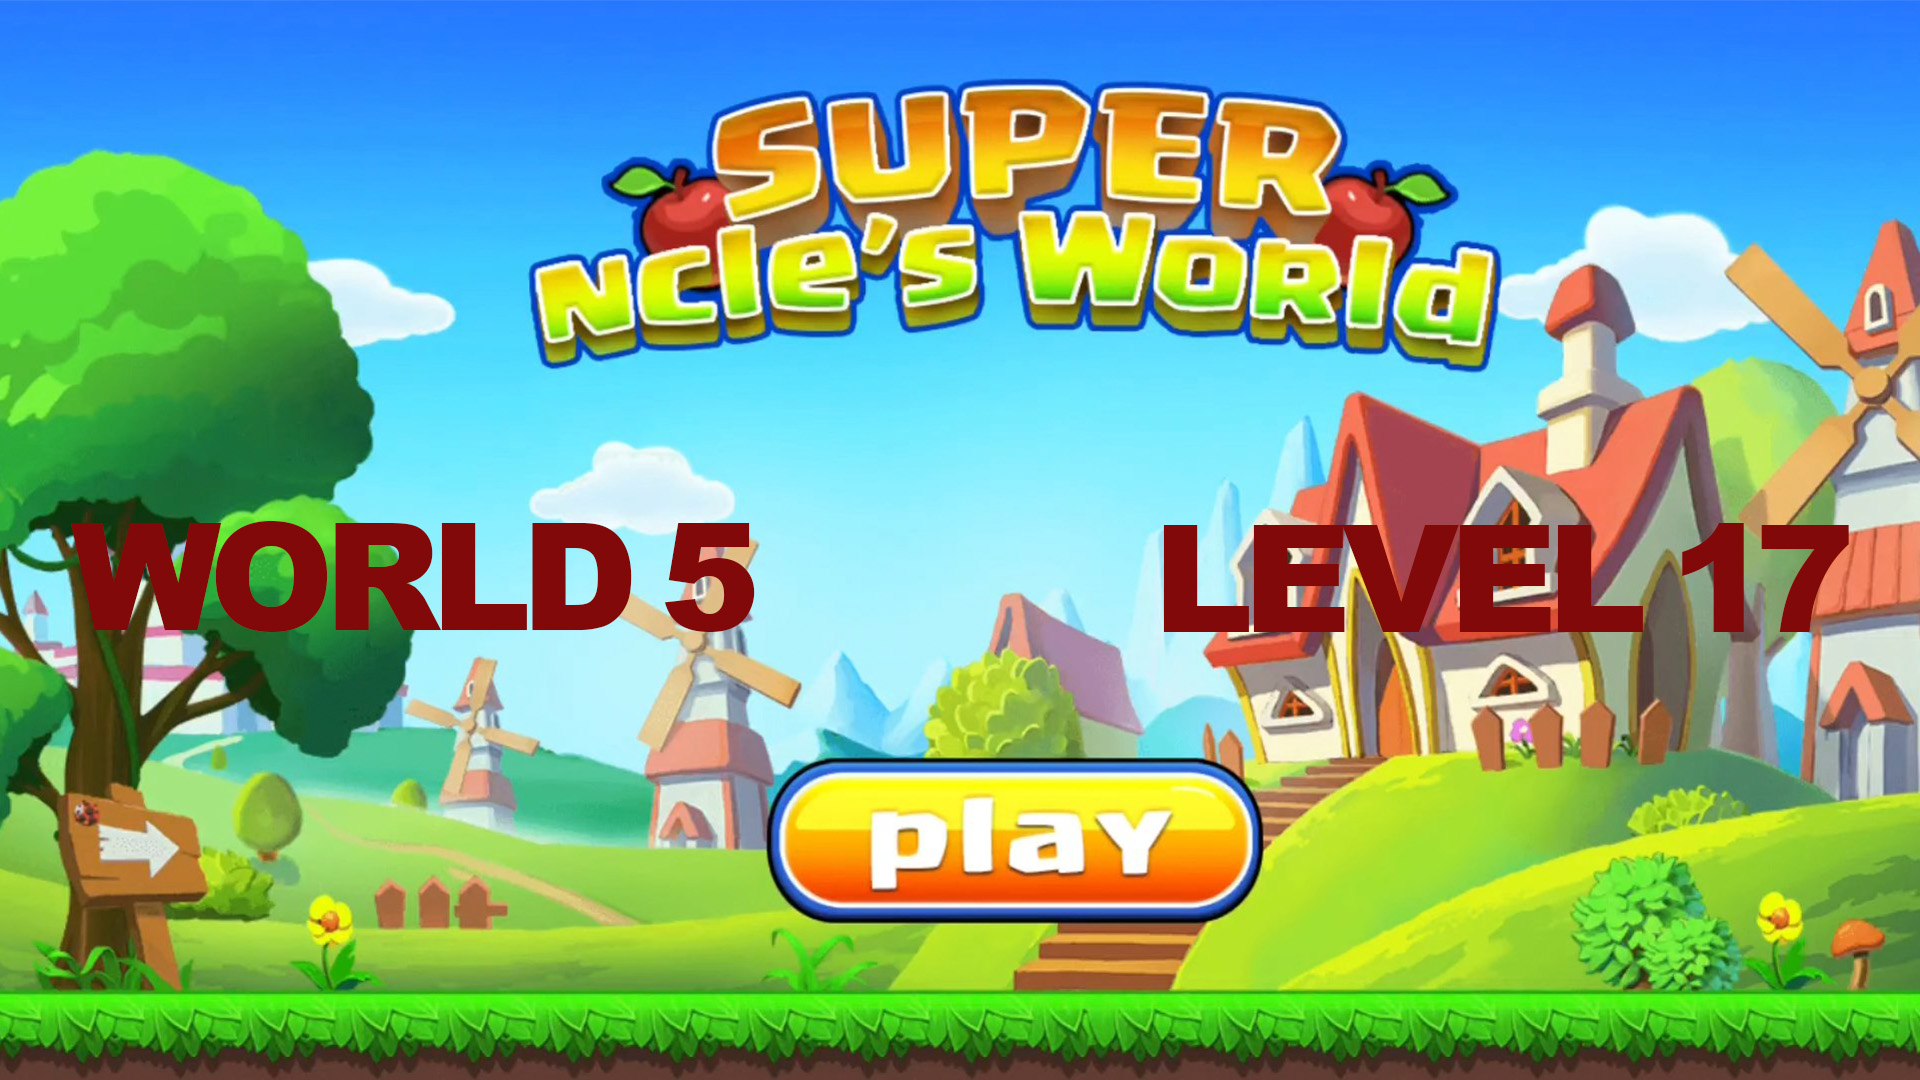 Super ncle's  World 5. Level 17.